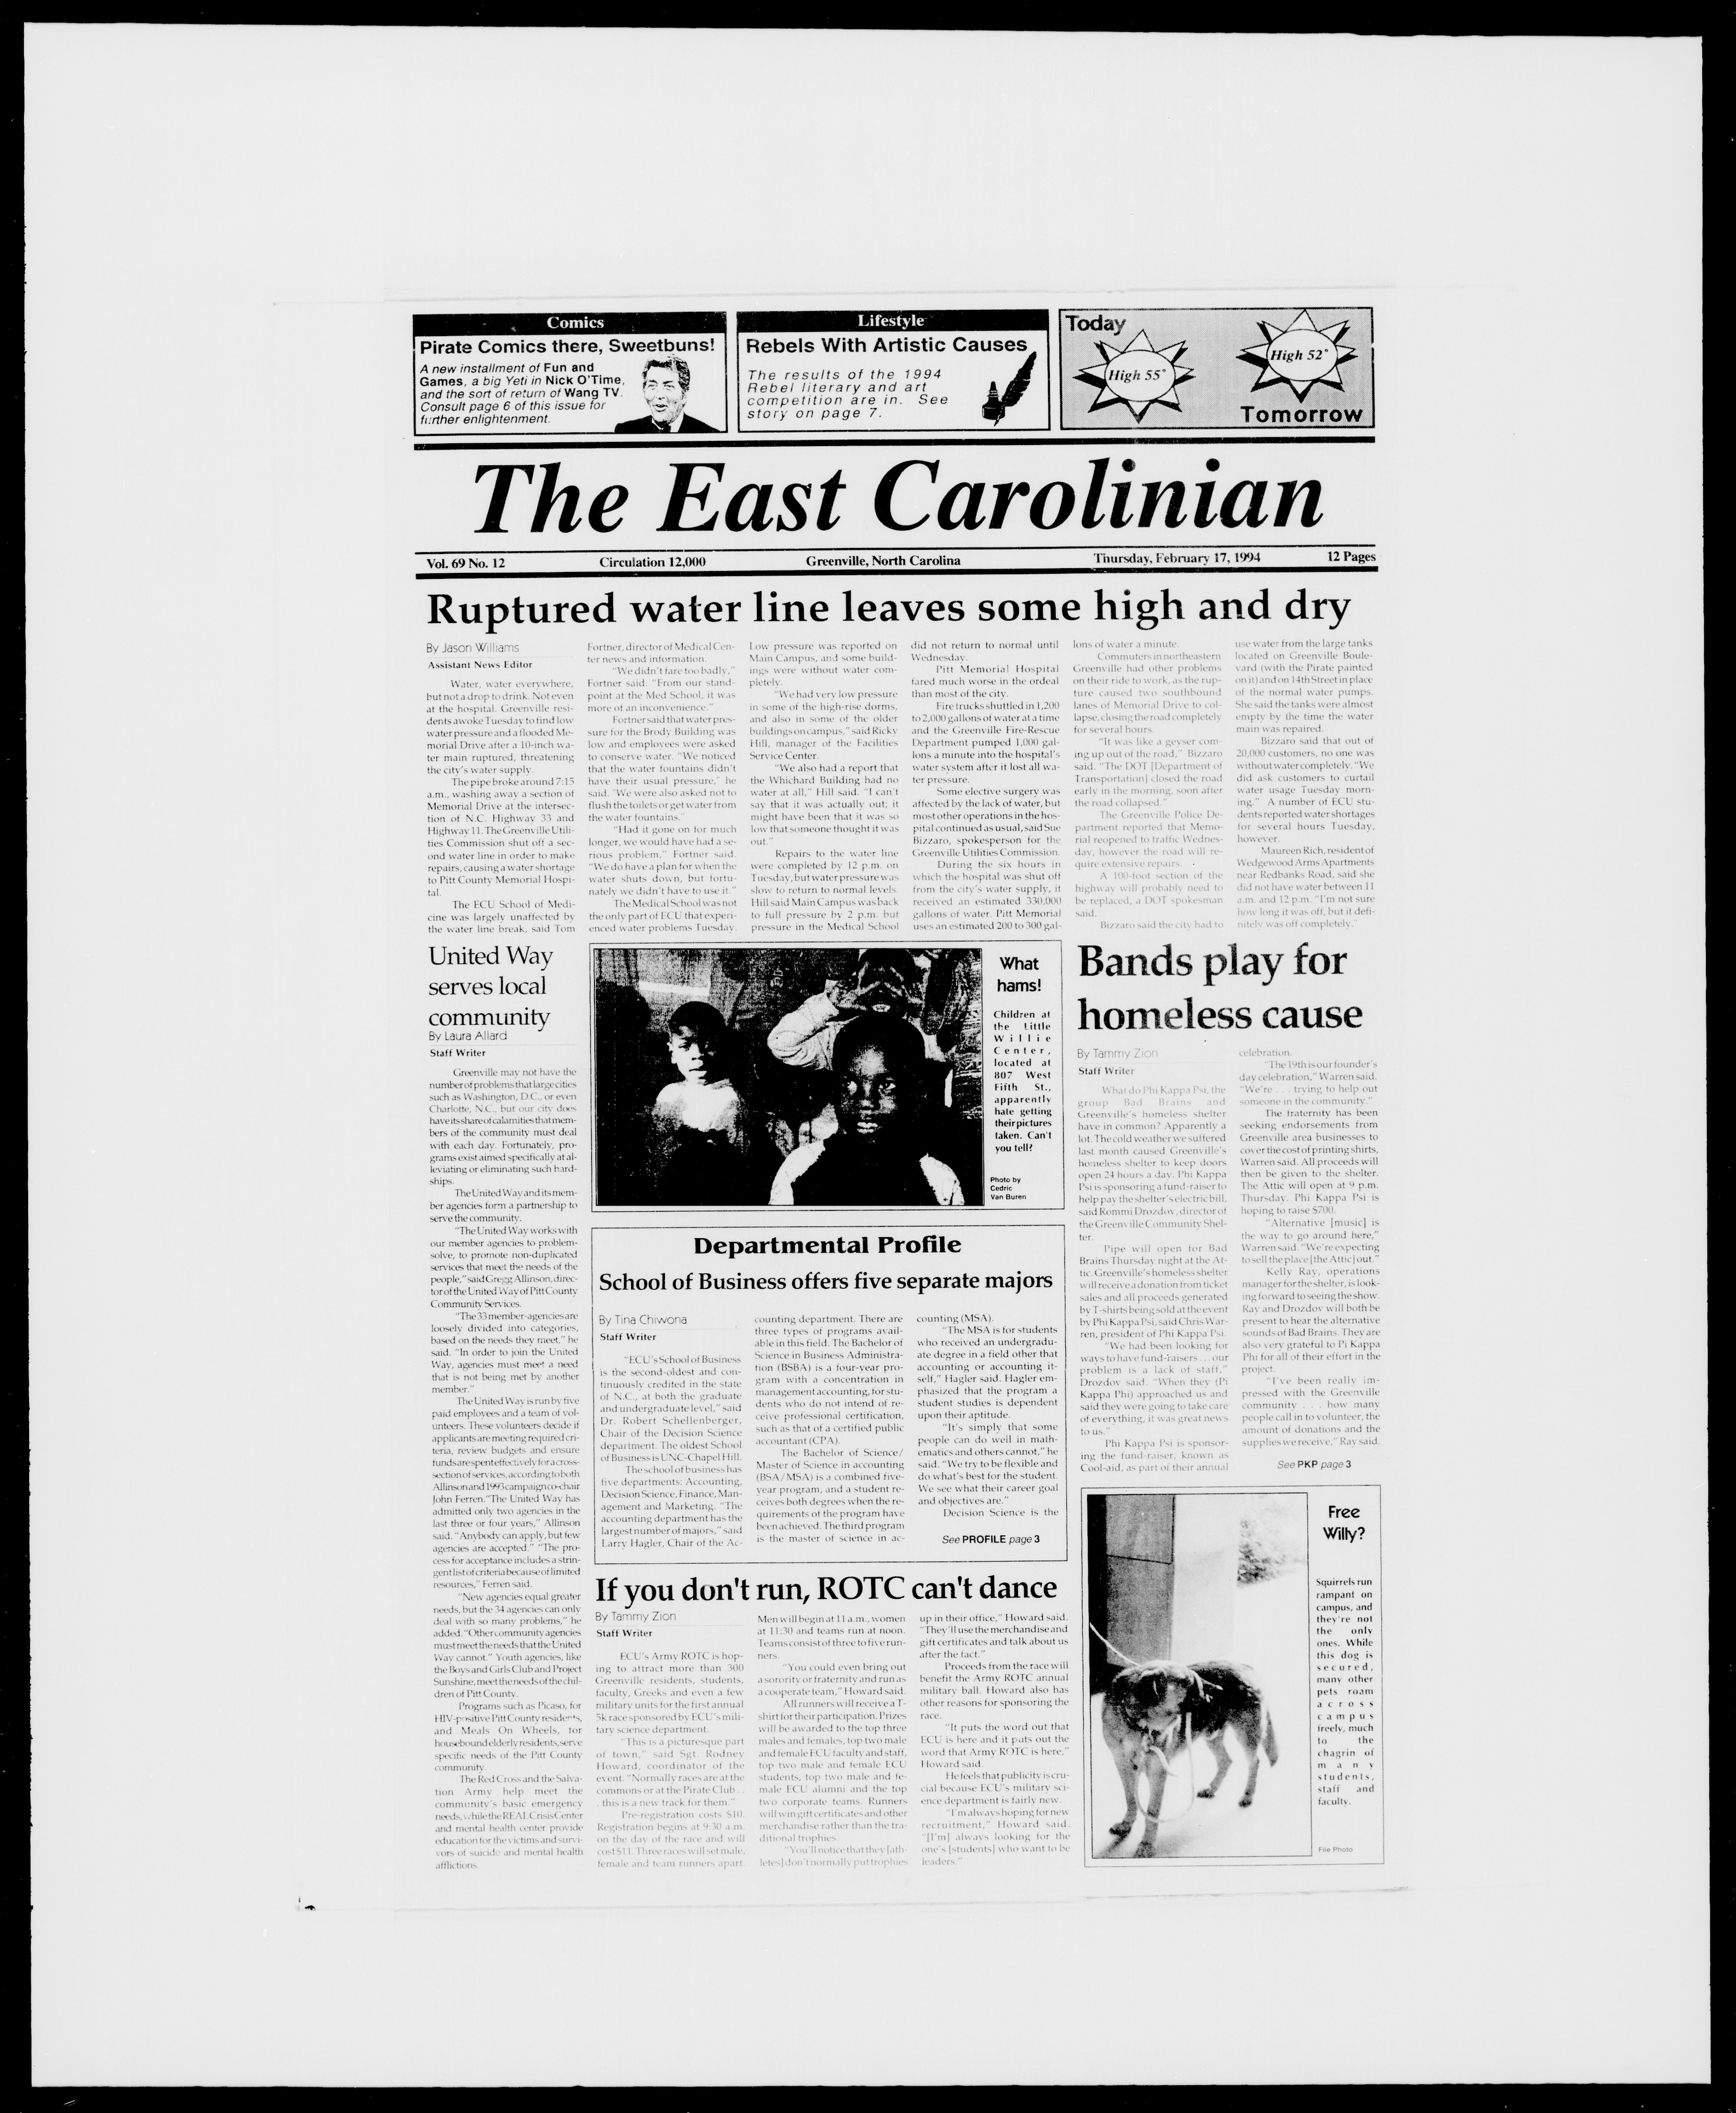 The East Carolinian, February 17, 1994 pic